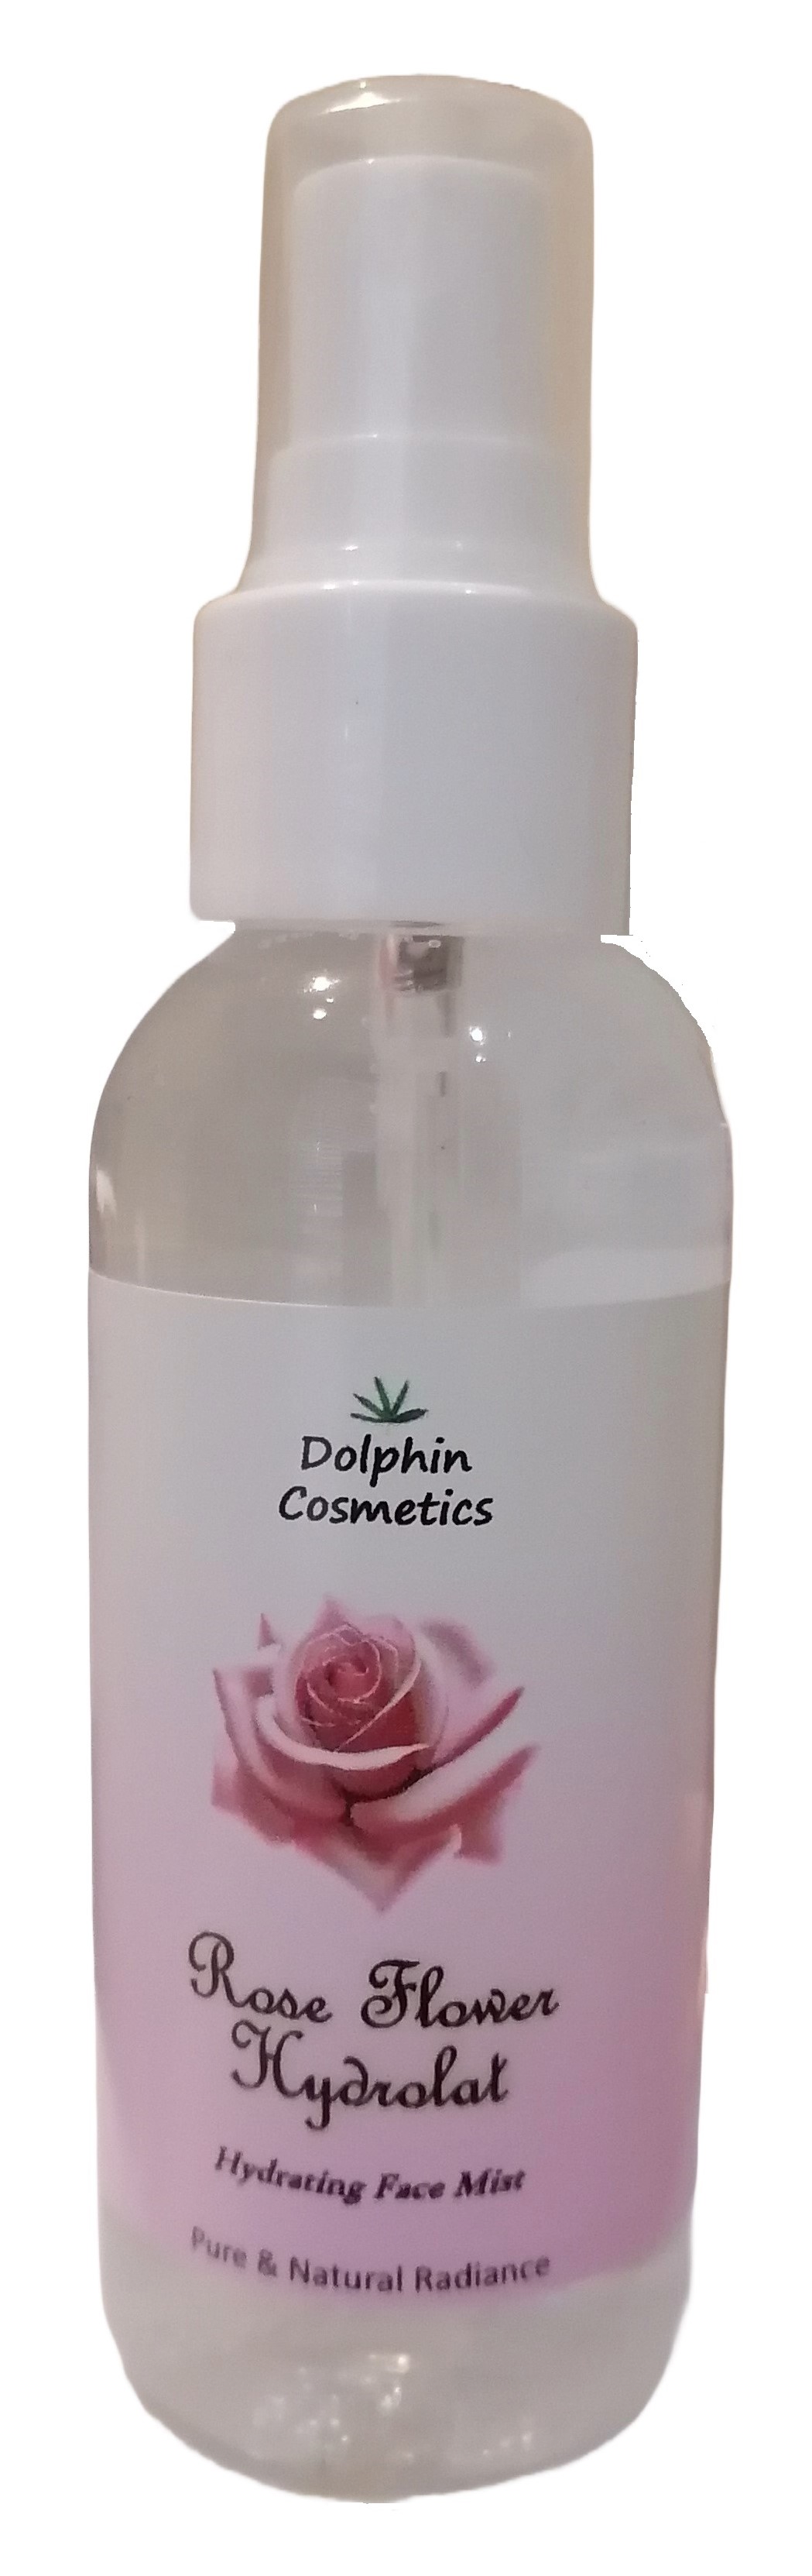 dolphin-cosmetics-rose-flower-hydrolat-100mls